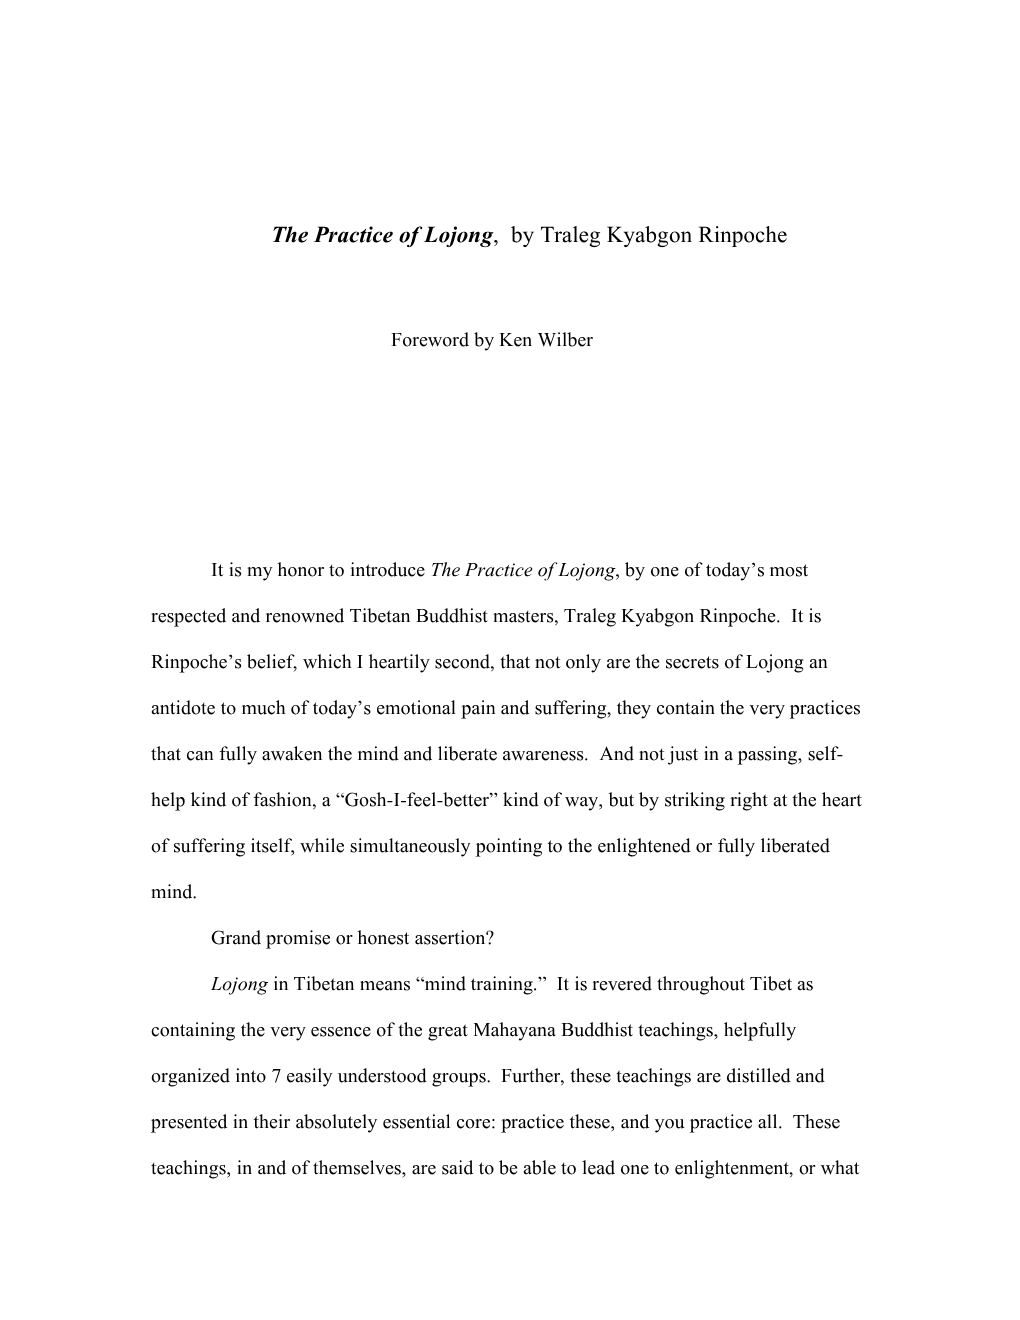 The Practice of Lojong, by Traleg Kyabgon Rinpoche